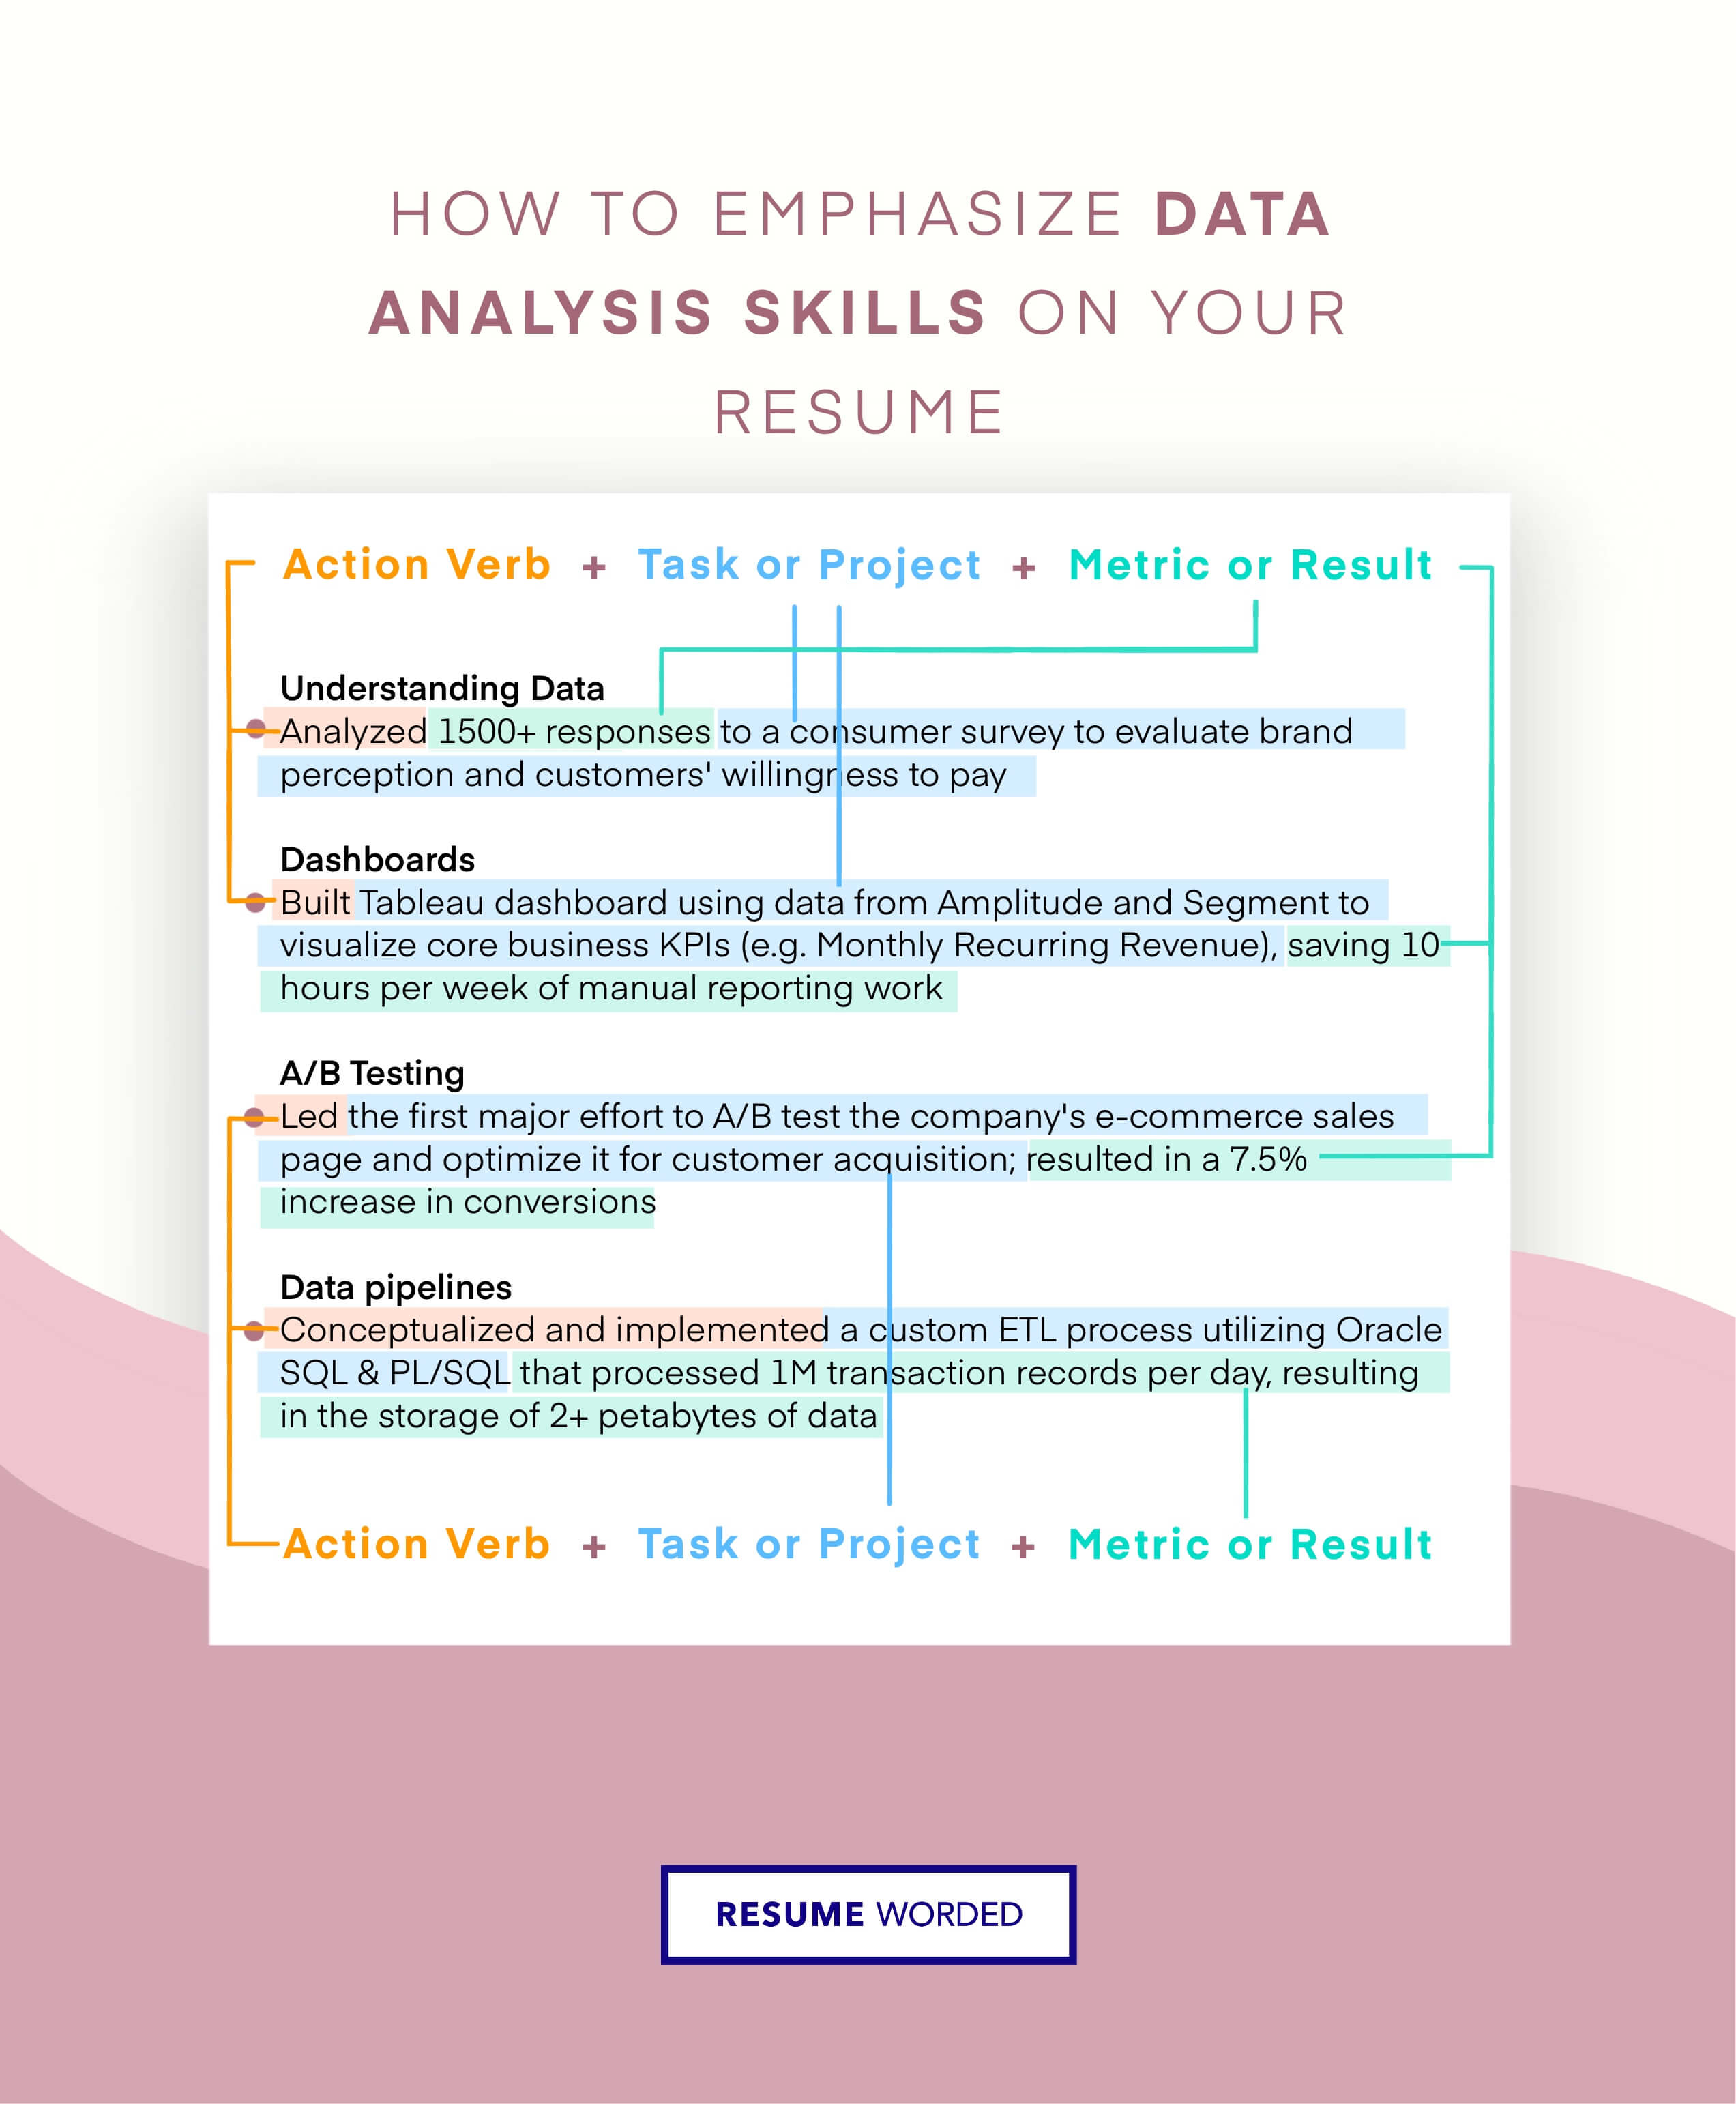 Demonstrate practical application of data analysis skills - Entry Level Data Analyst CV